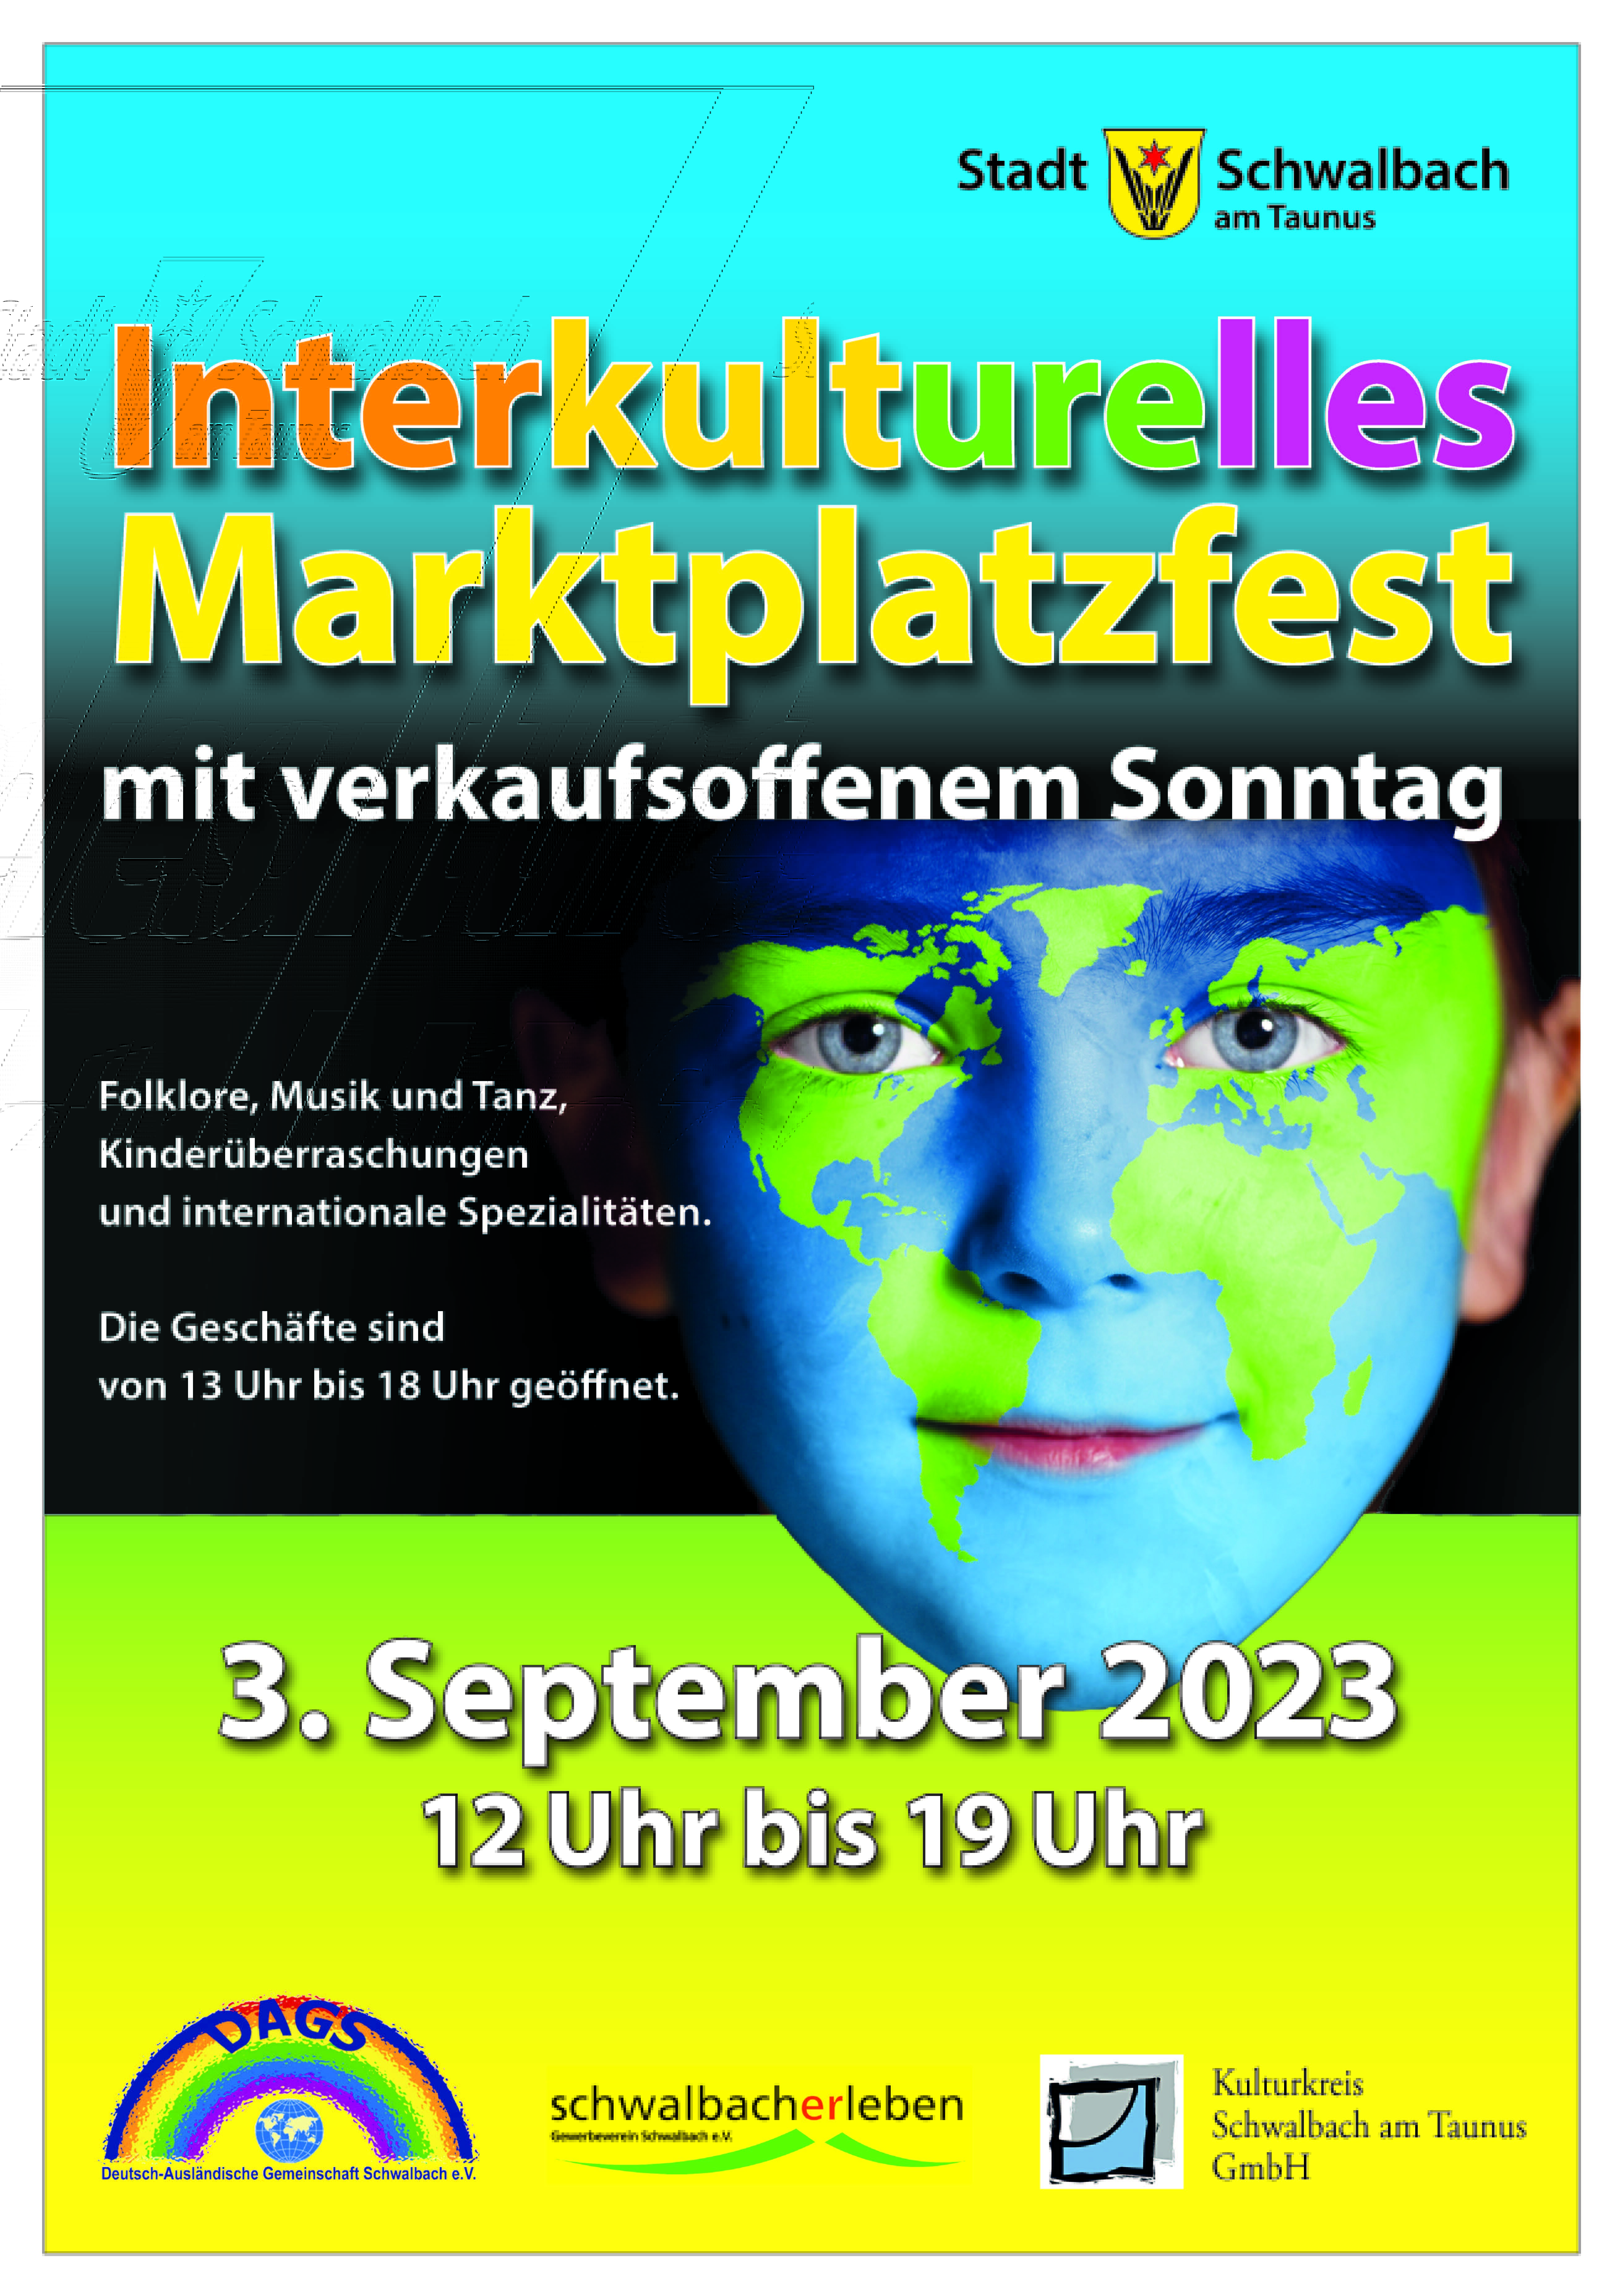 Interkulturelles Marktplatzfest 2023